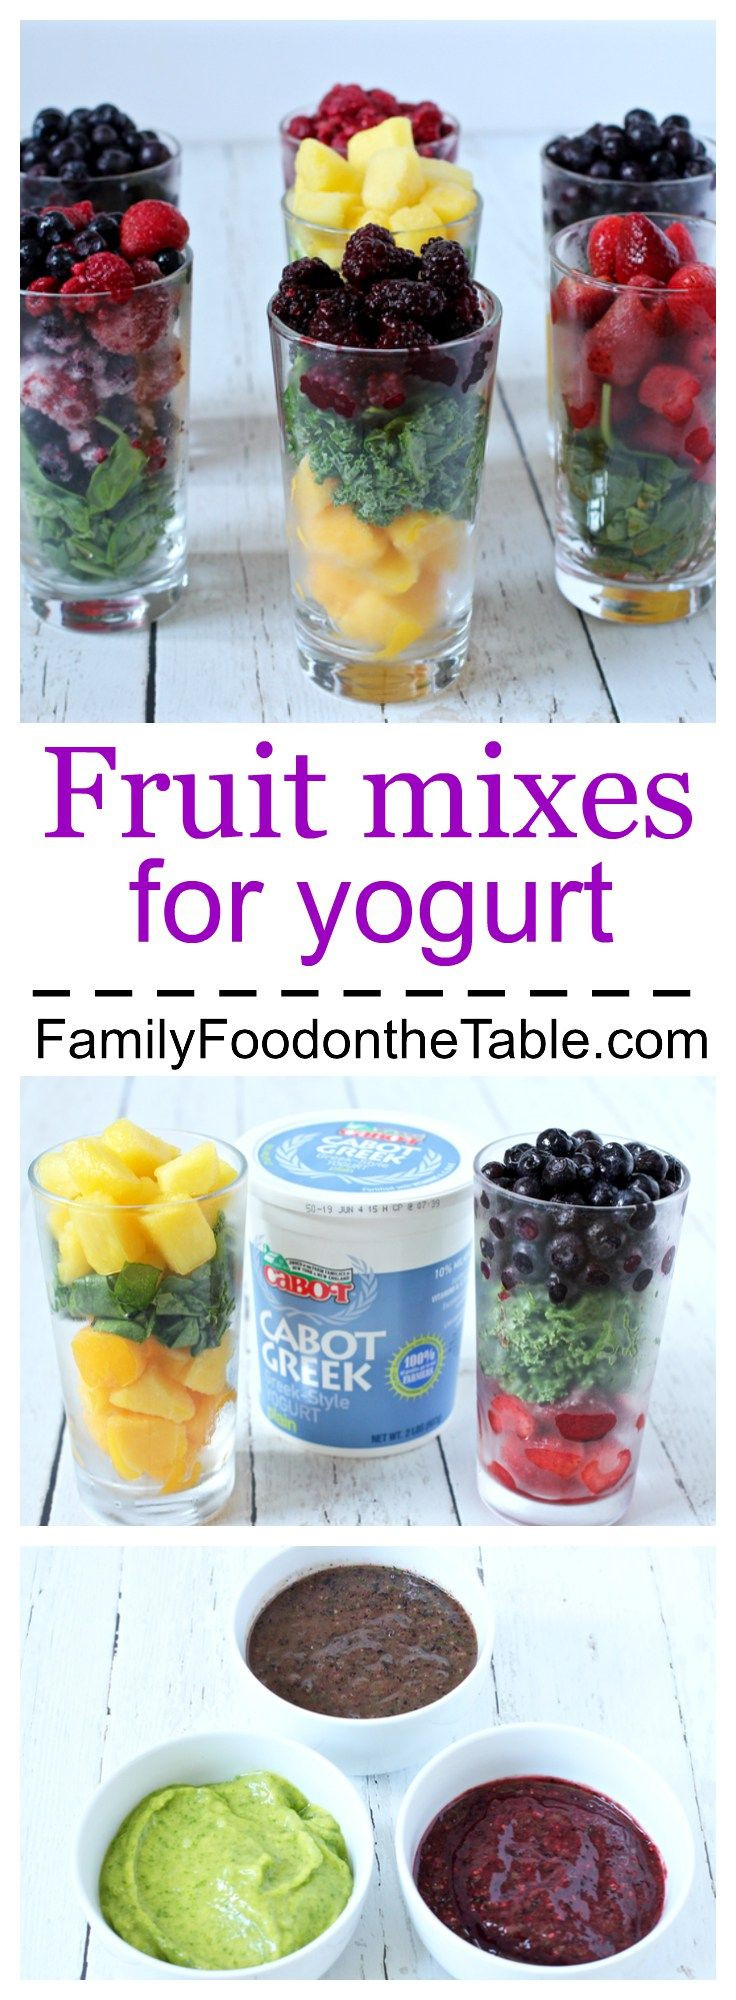 Yogurt Recipes For Baby
 Fruit mix ins for yogurt Recipe